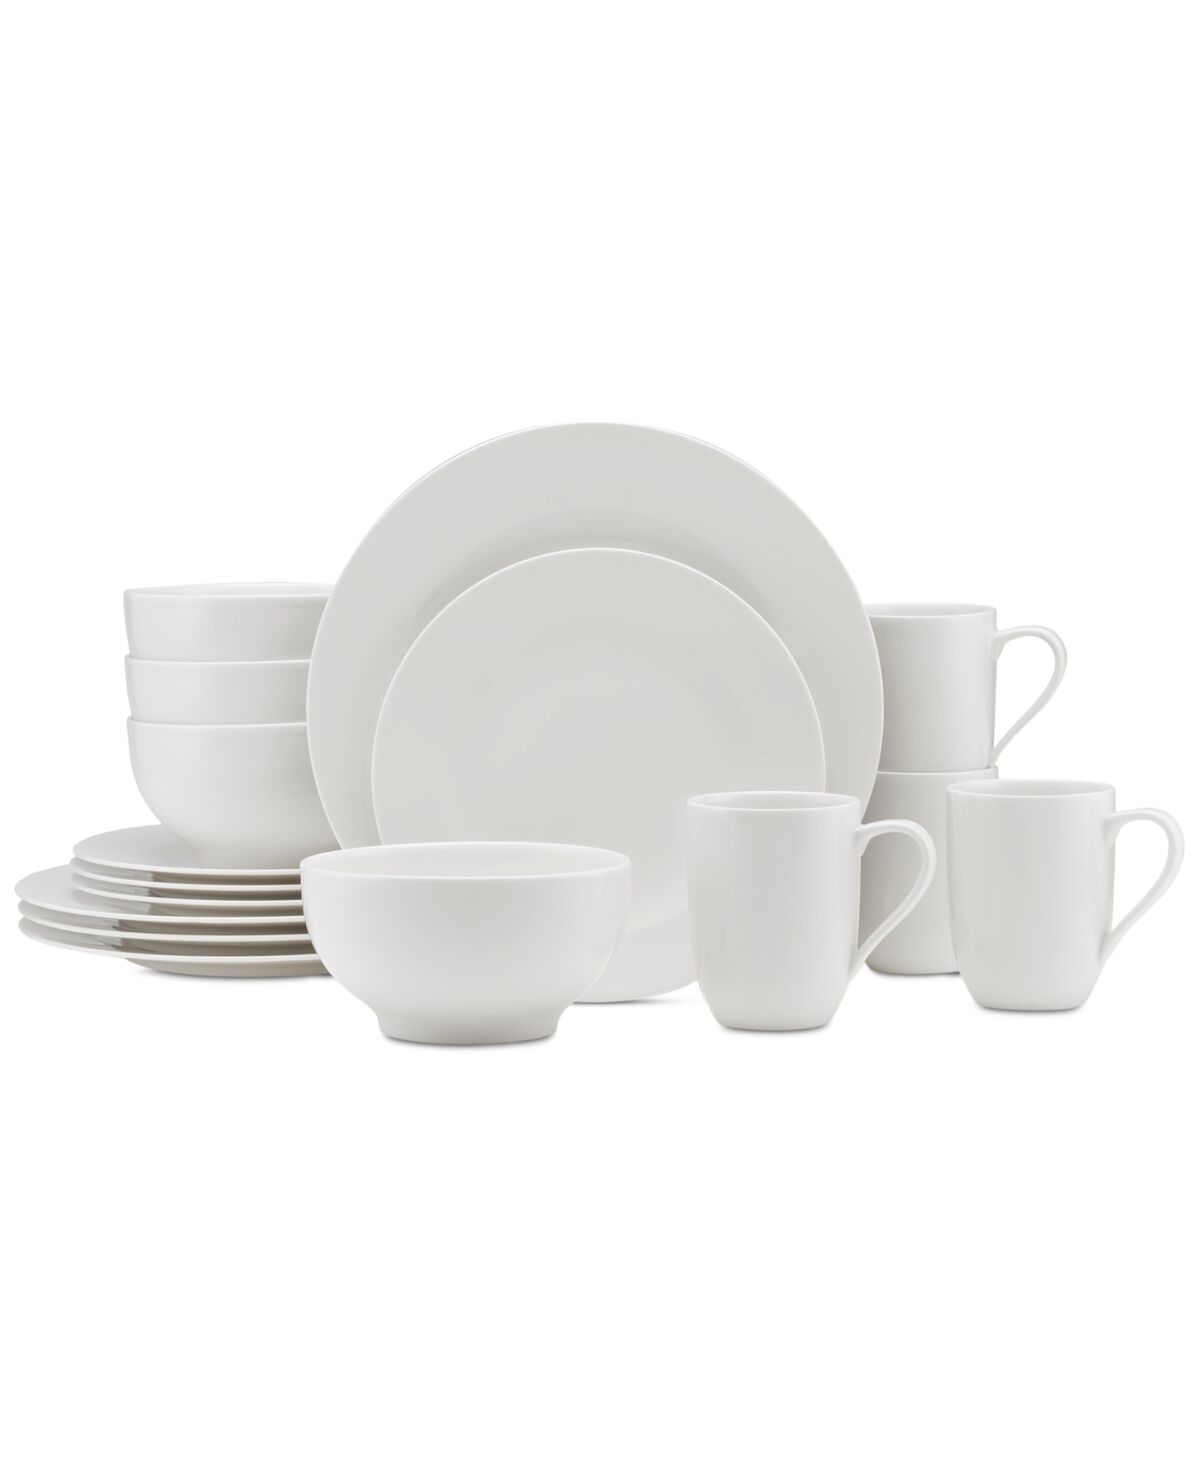 Villeroy & Boch Dinnerware For Me Collection Porcelain 16 Dinnerware Set, Service for 4 - White